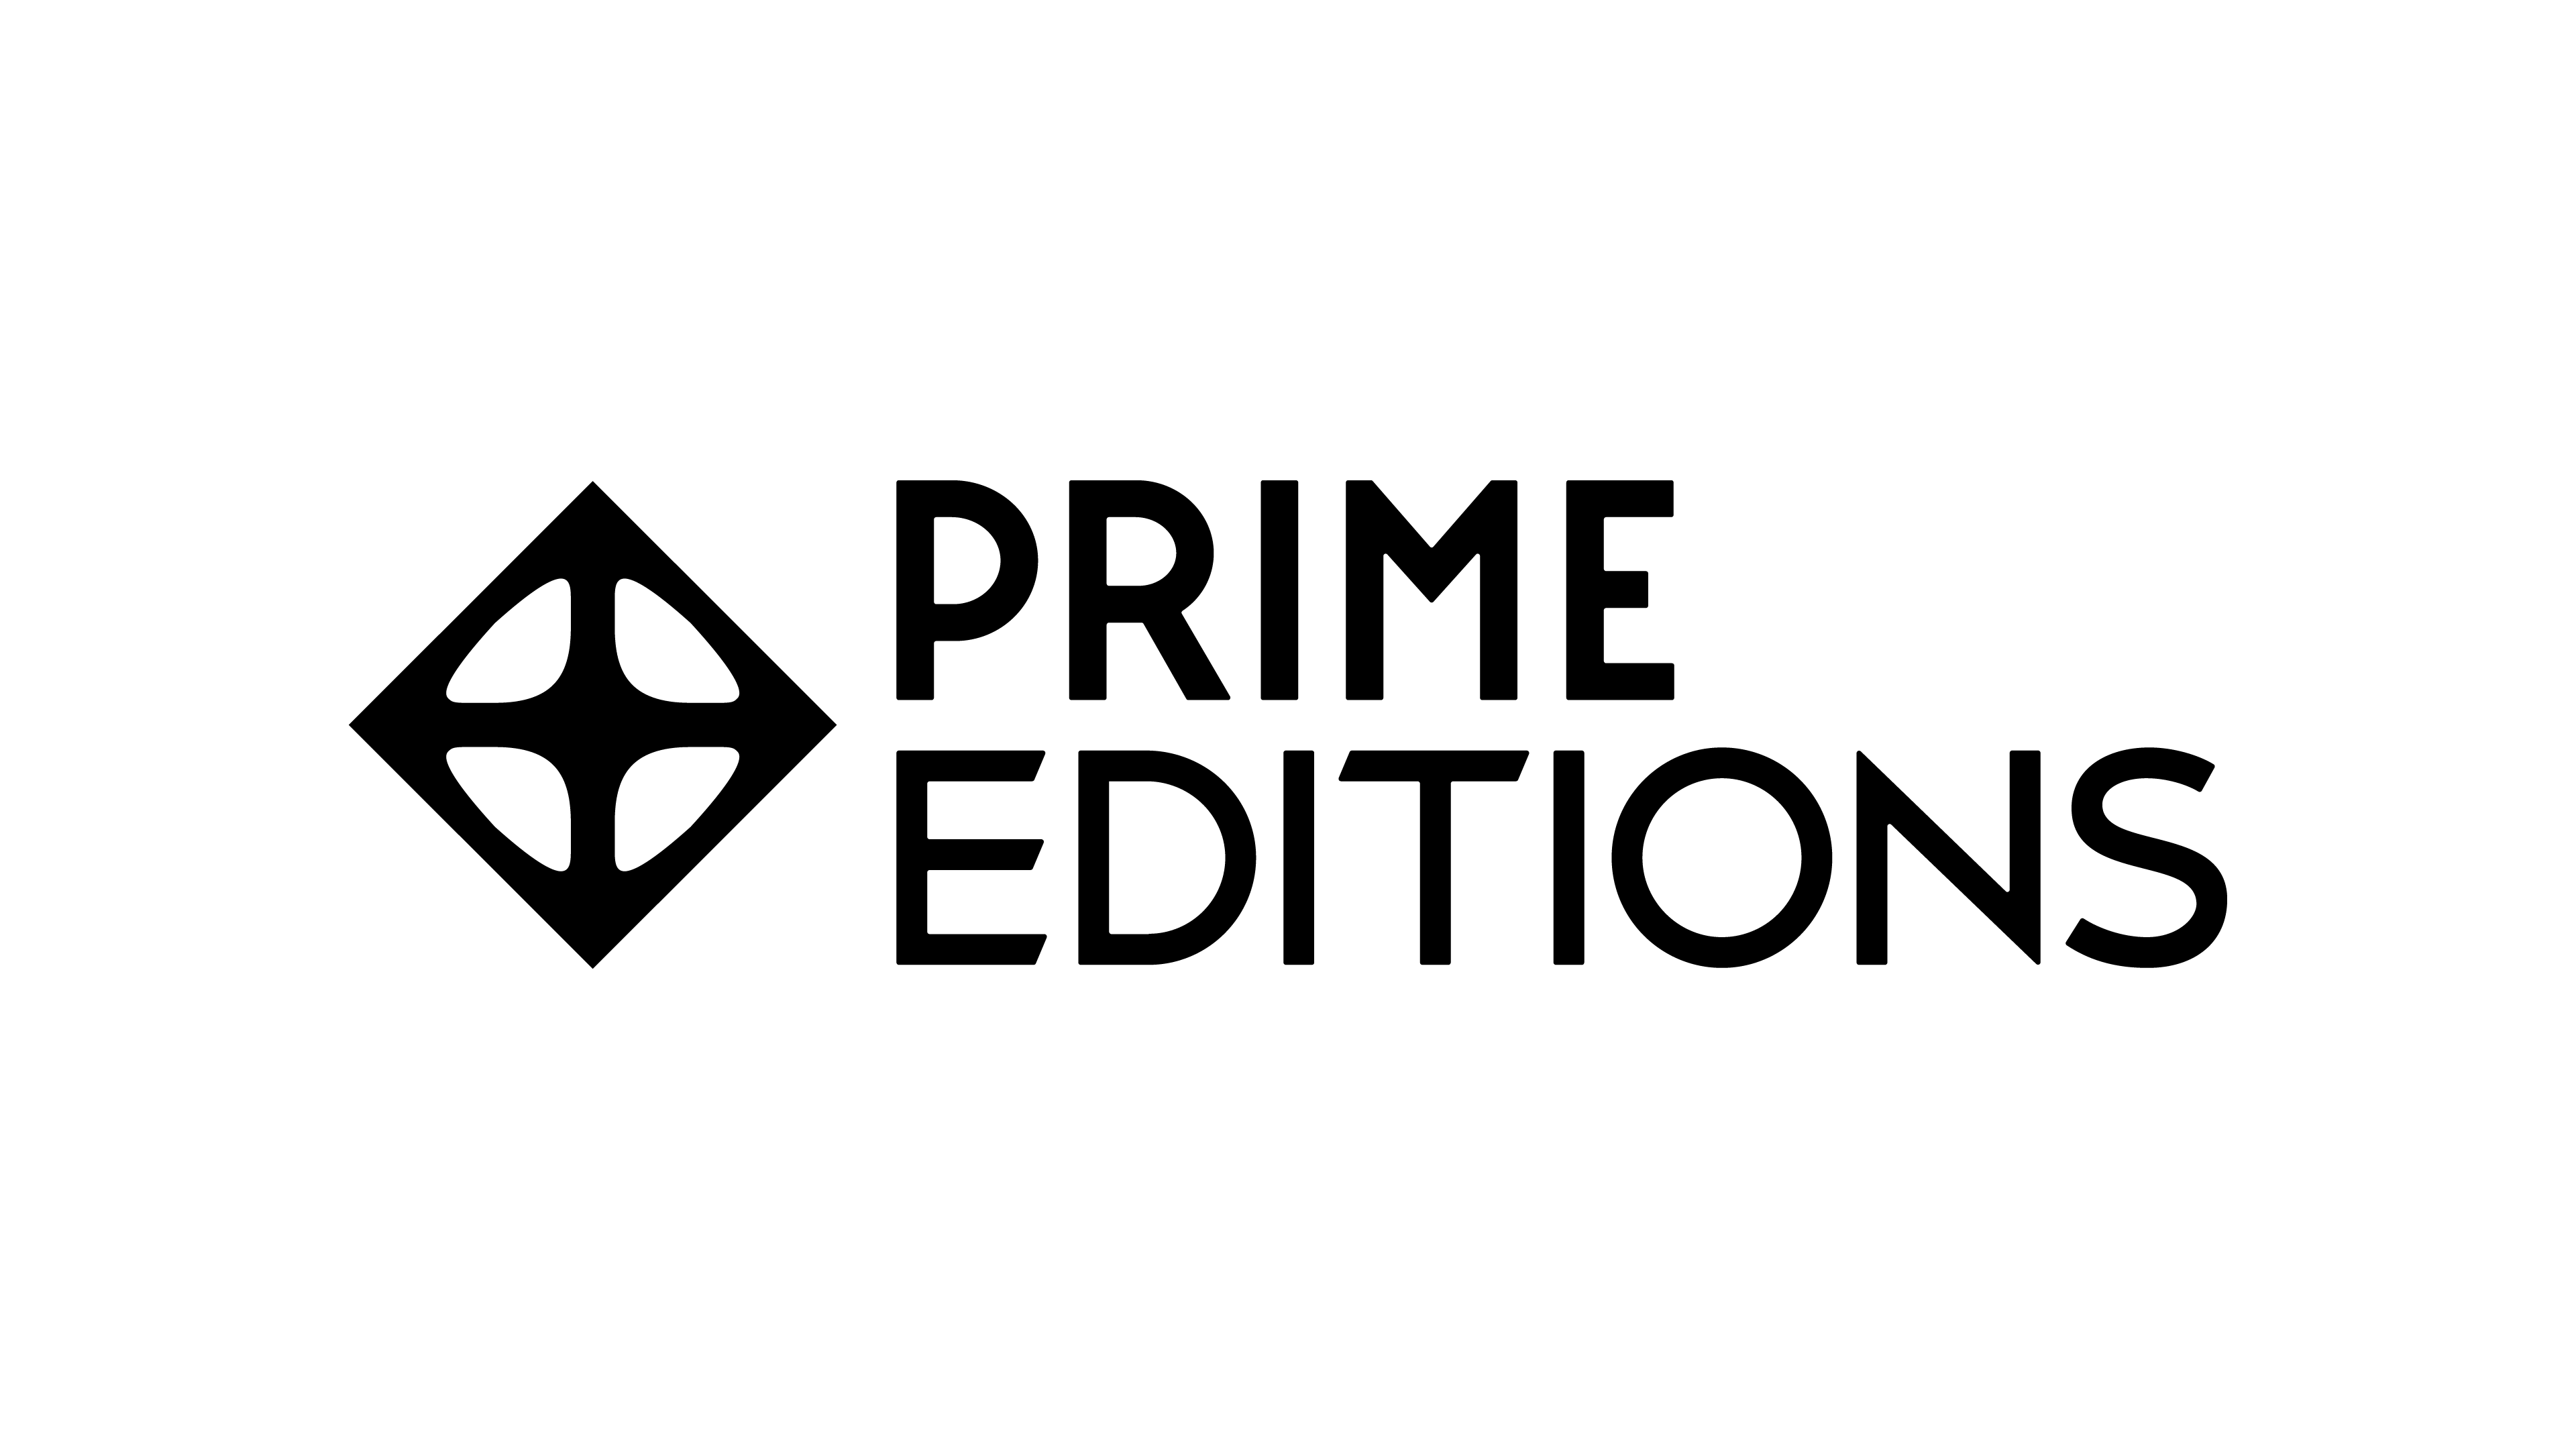 Prime Editions